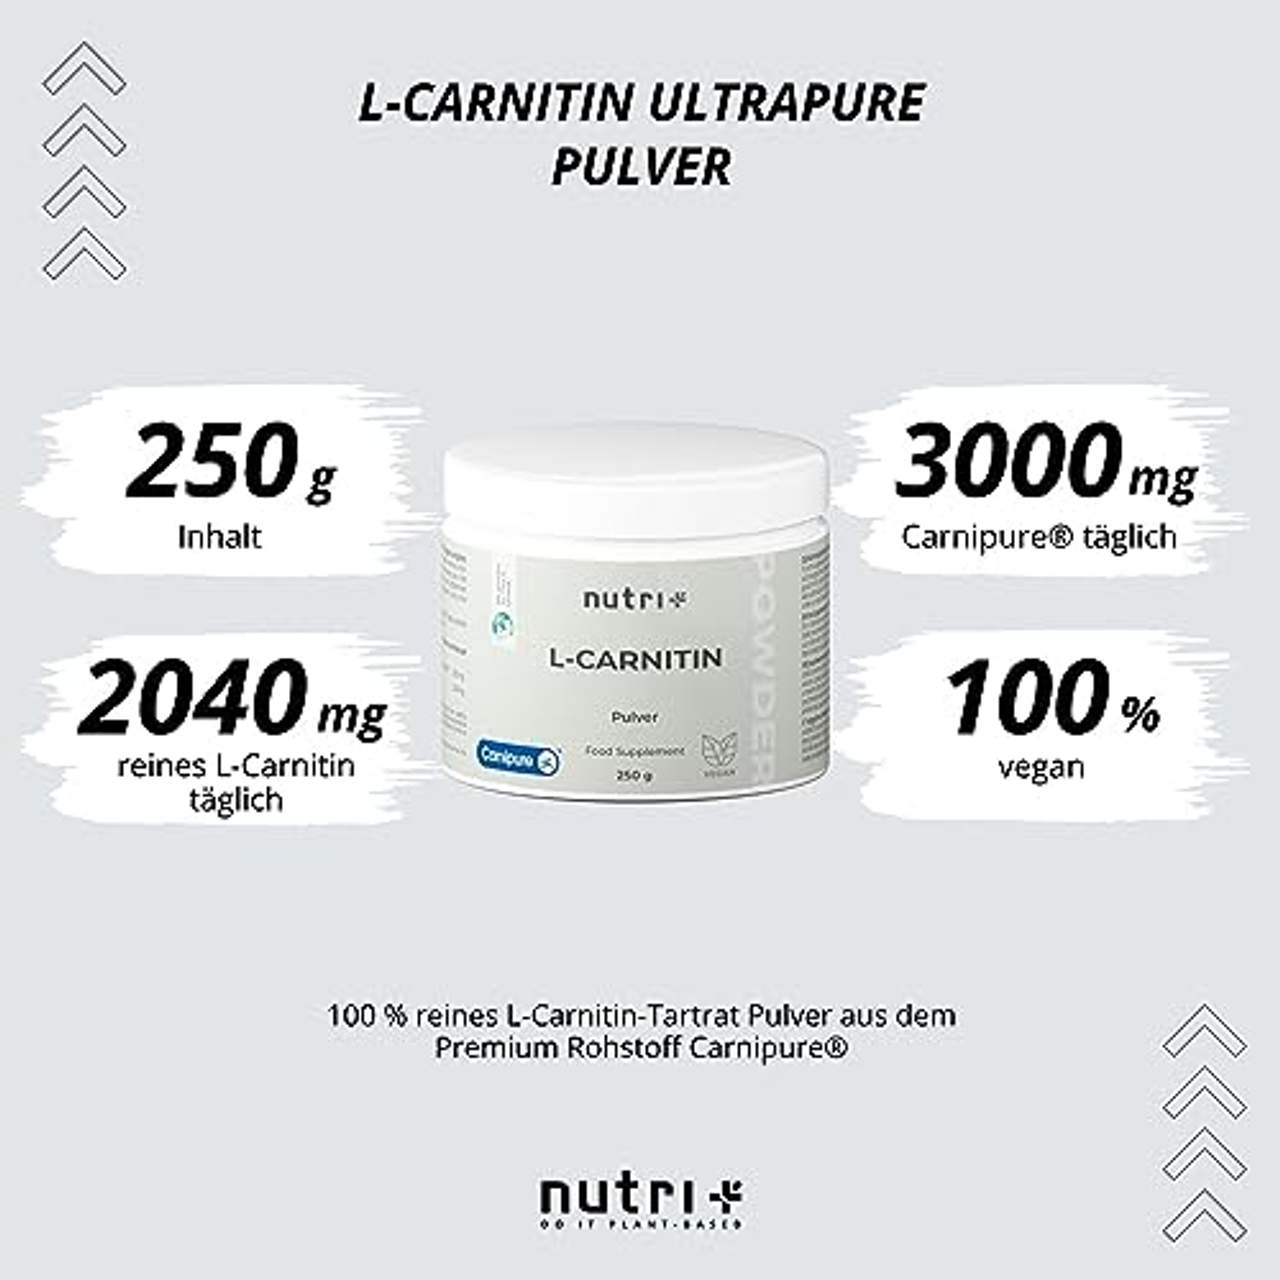 Nutri + L-CARNITIN Carnipure Pulver